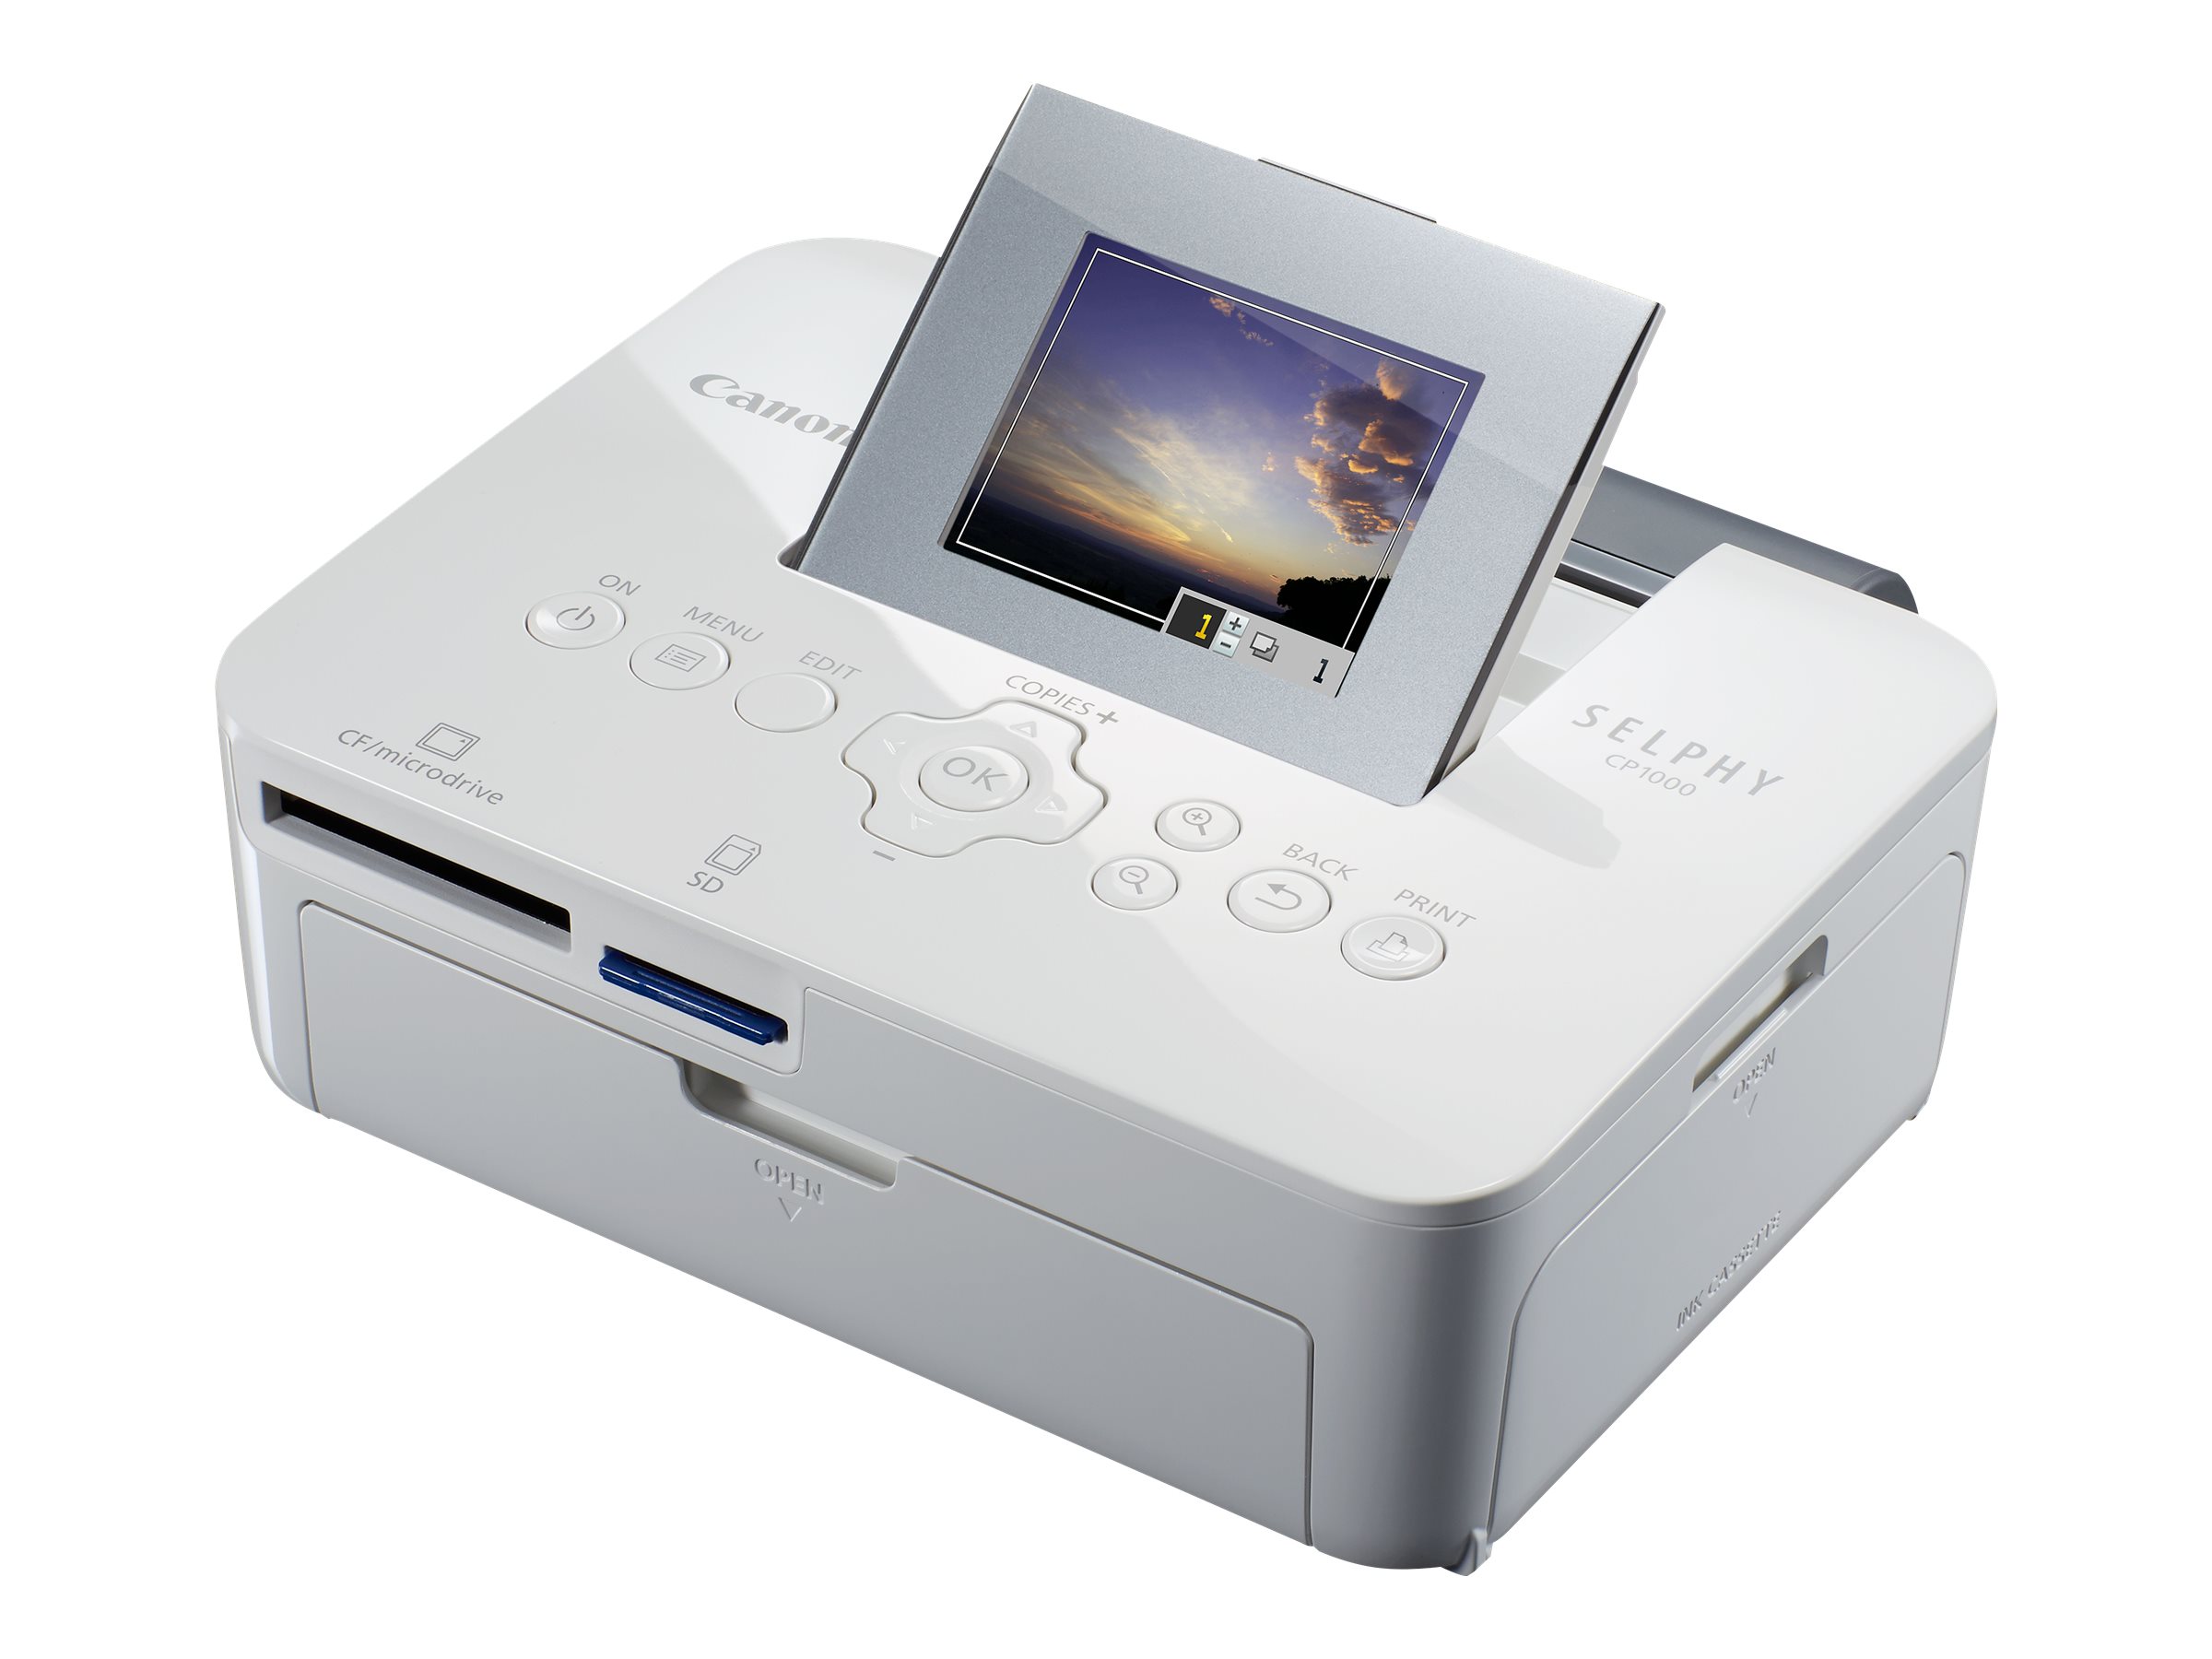 Mini-imprimante photo Canon SELPHY CP1000 BK (0077C006AA)